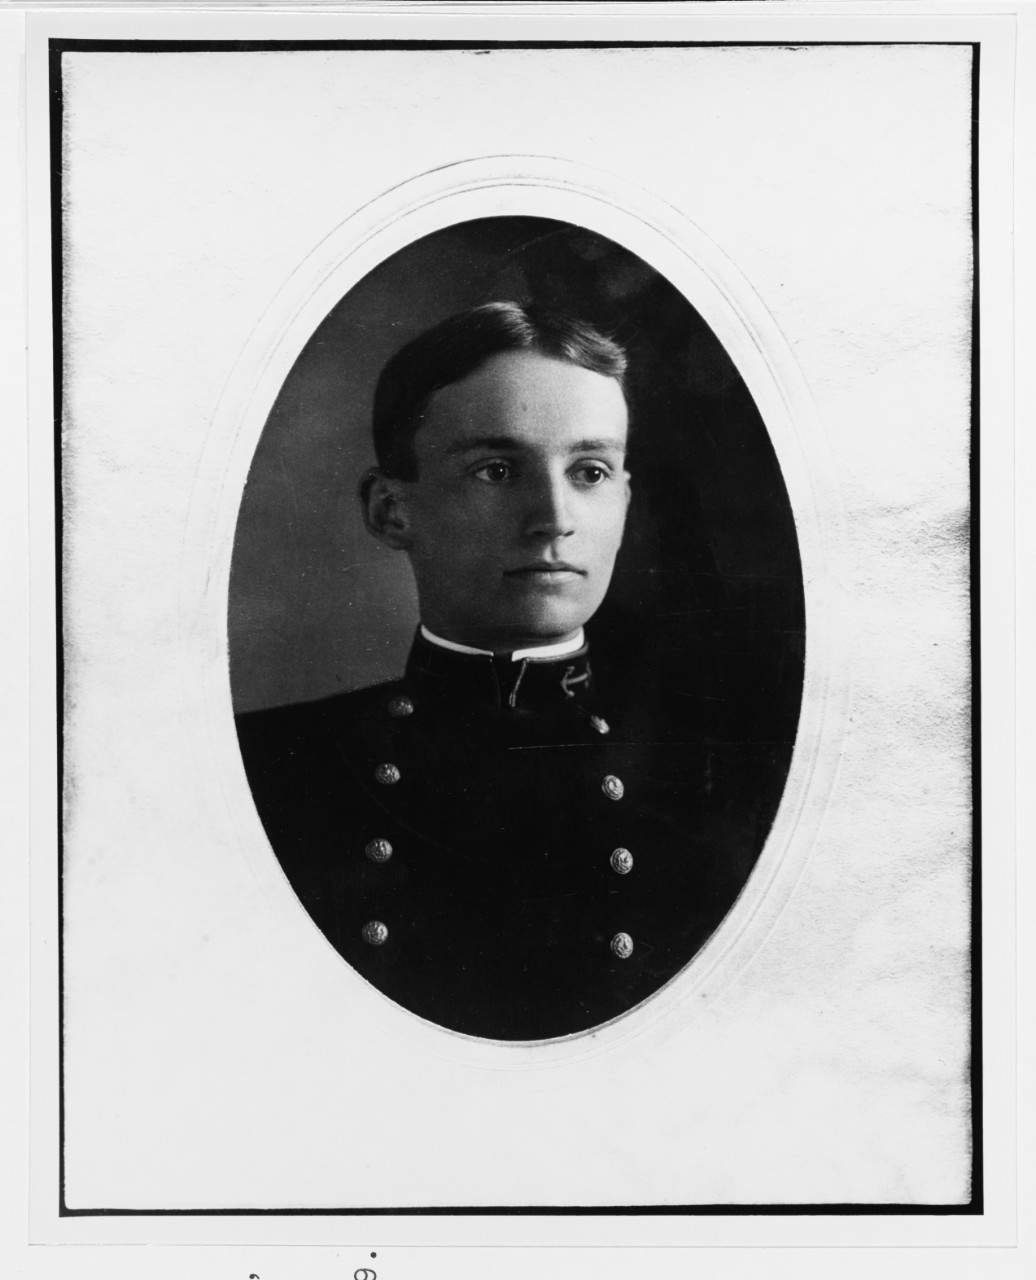 Midshipman Frank A. Braisted, USN